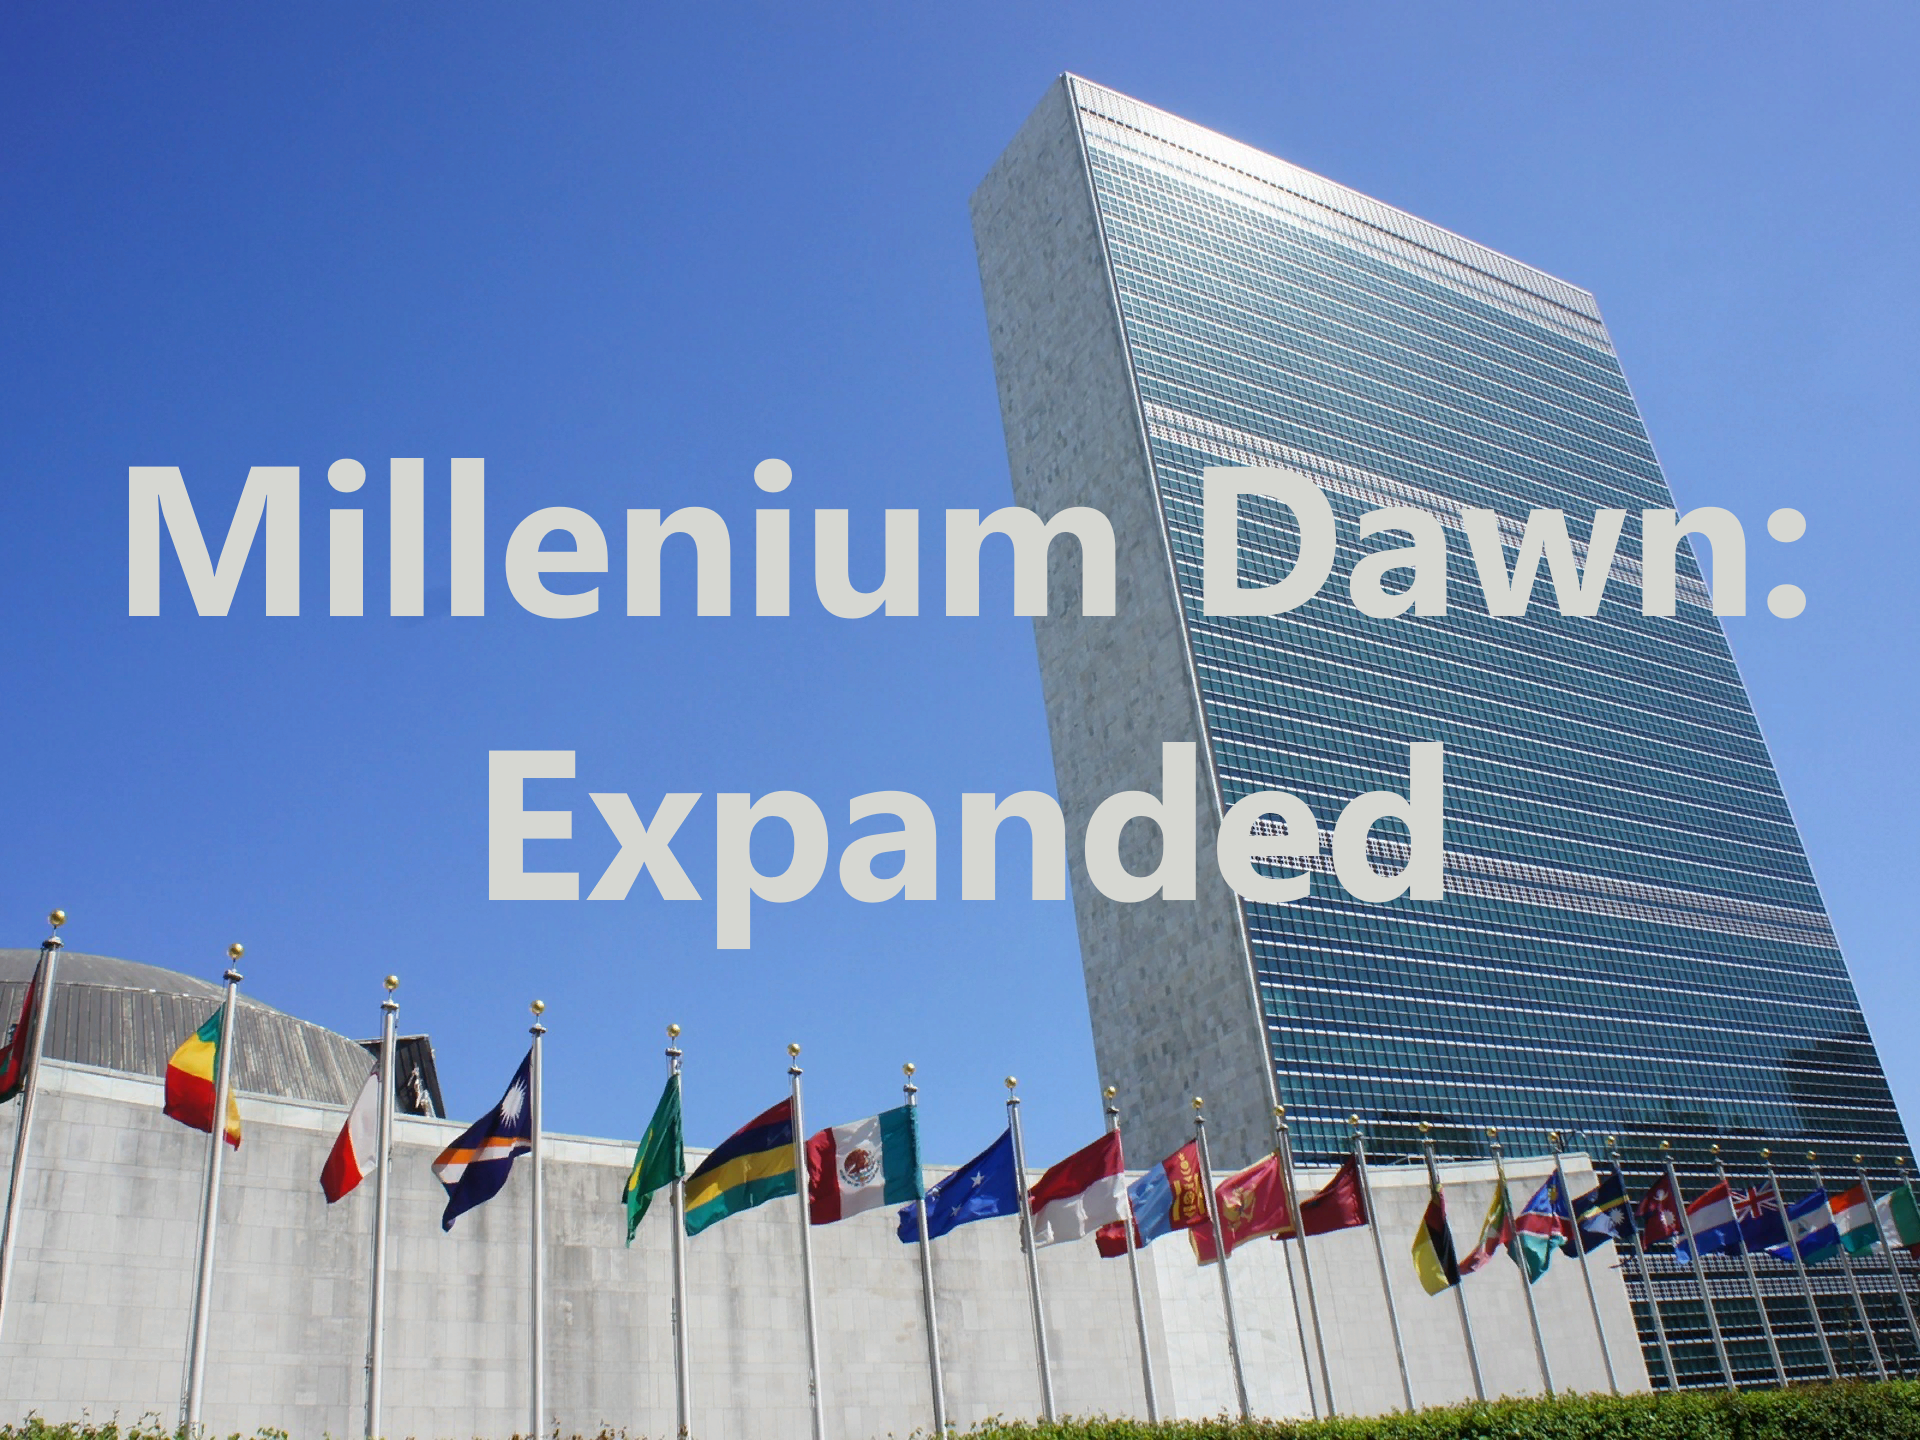 Millennium Dawn: Expanded